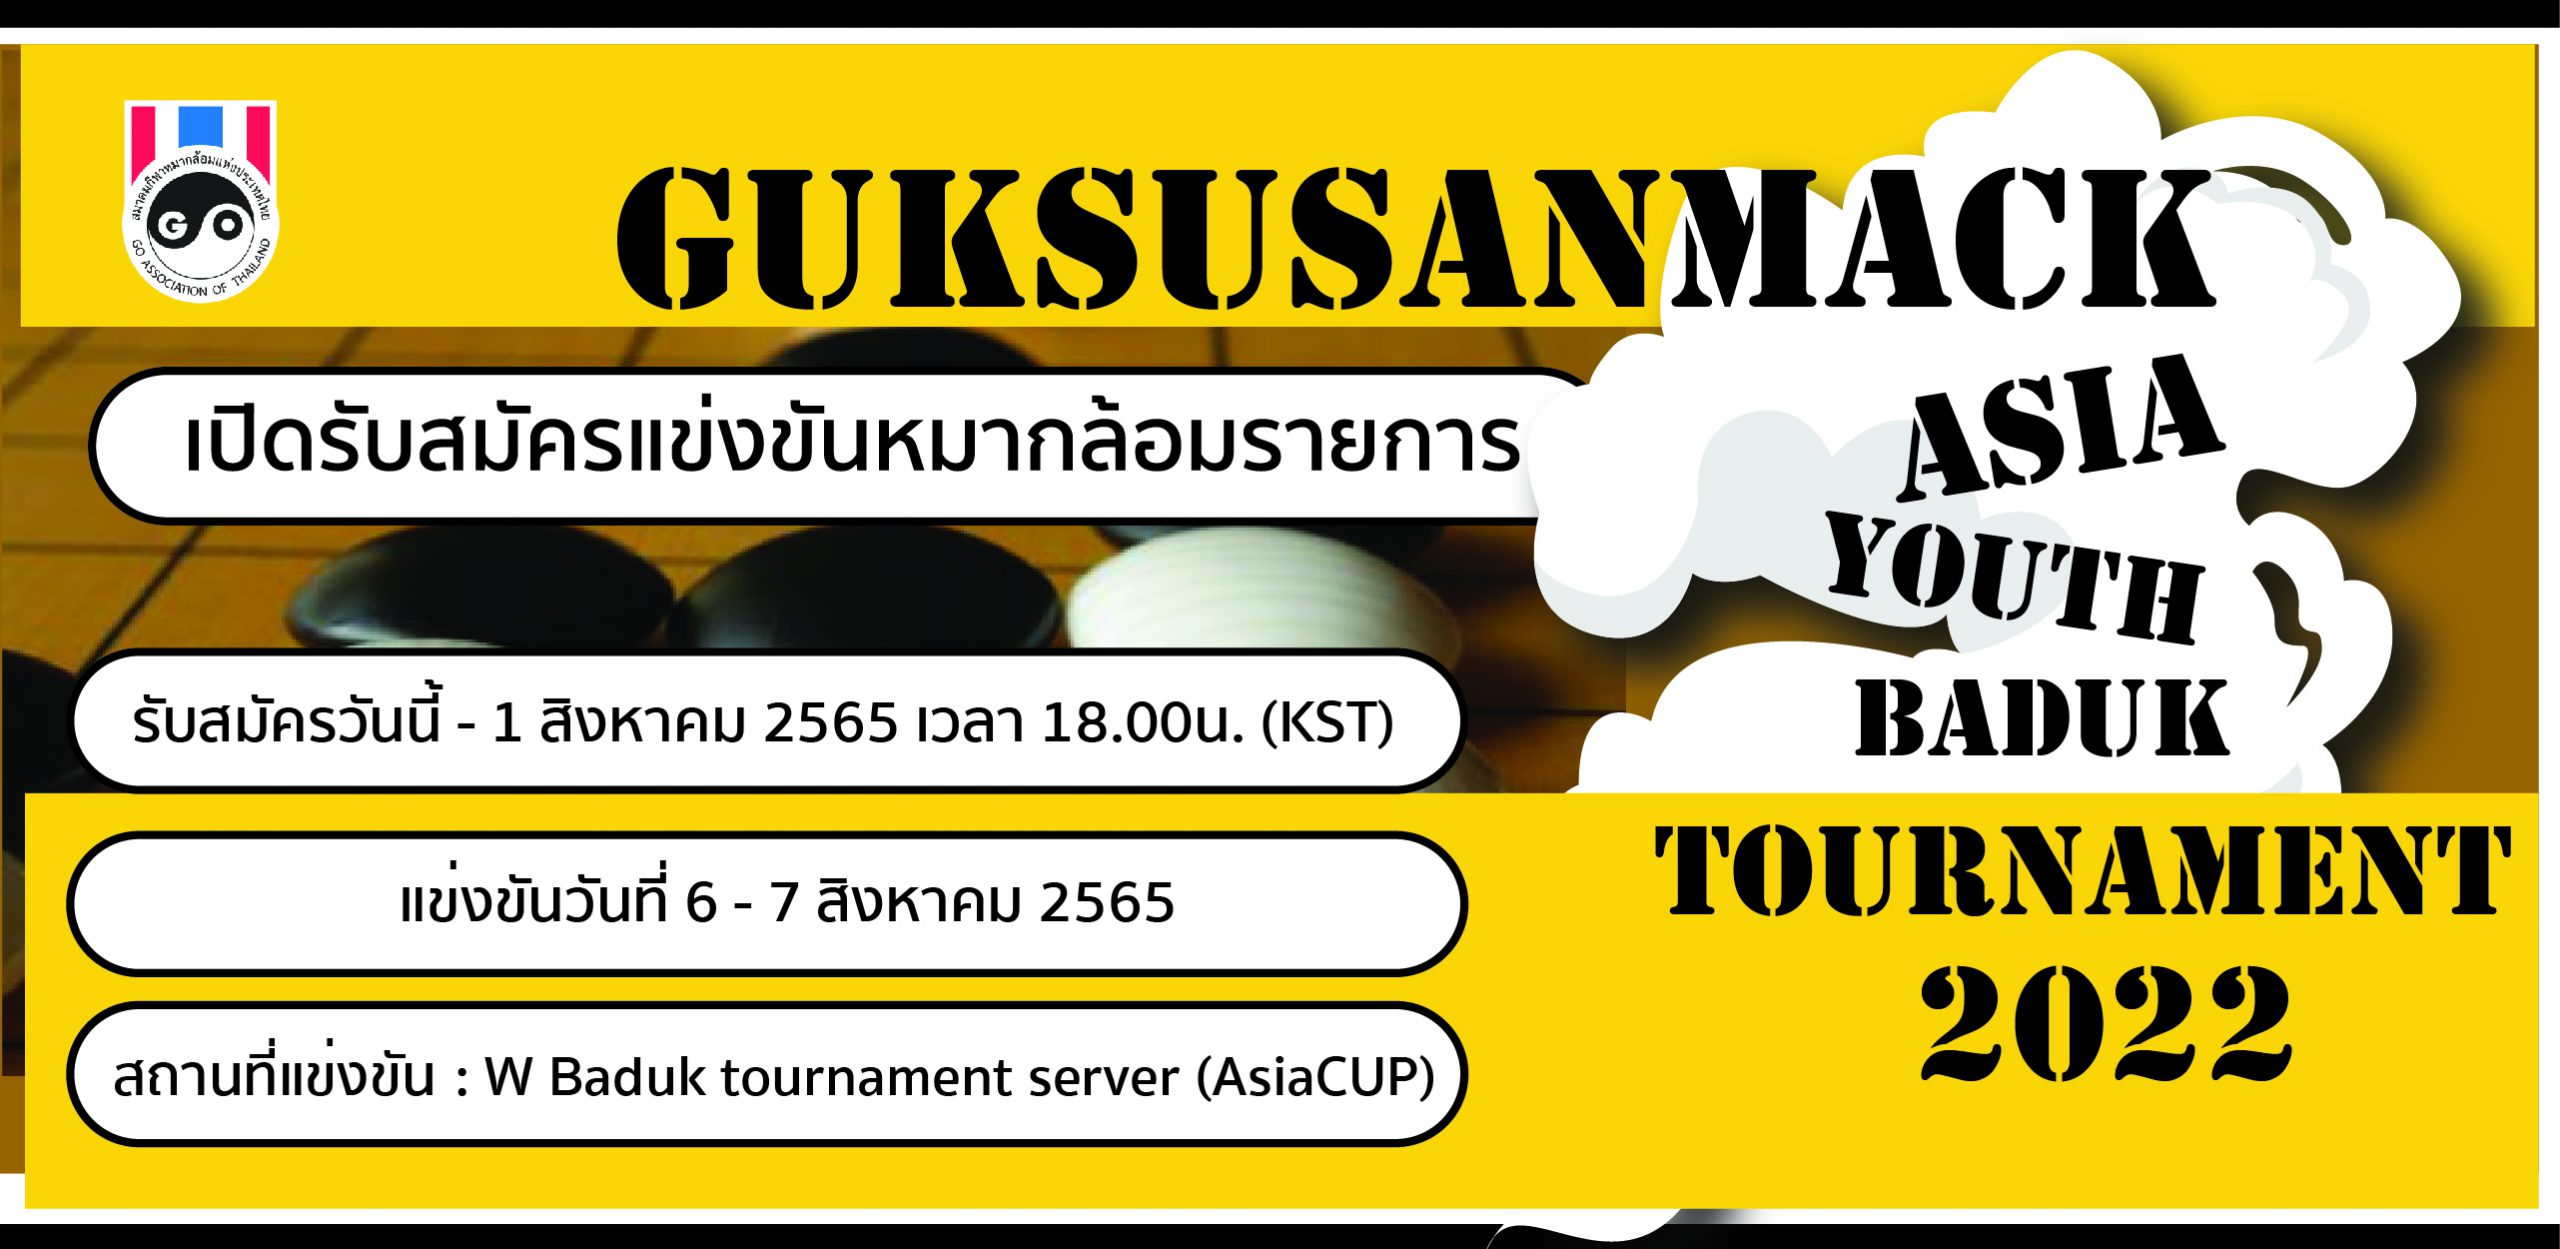 Guksusanmack Asia Youth Baduk Tournament 2022